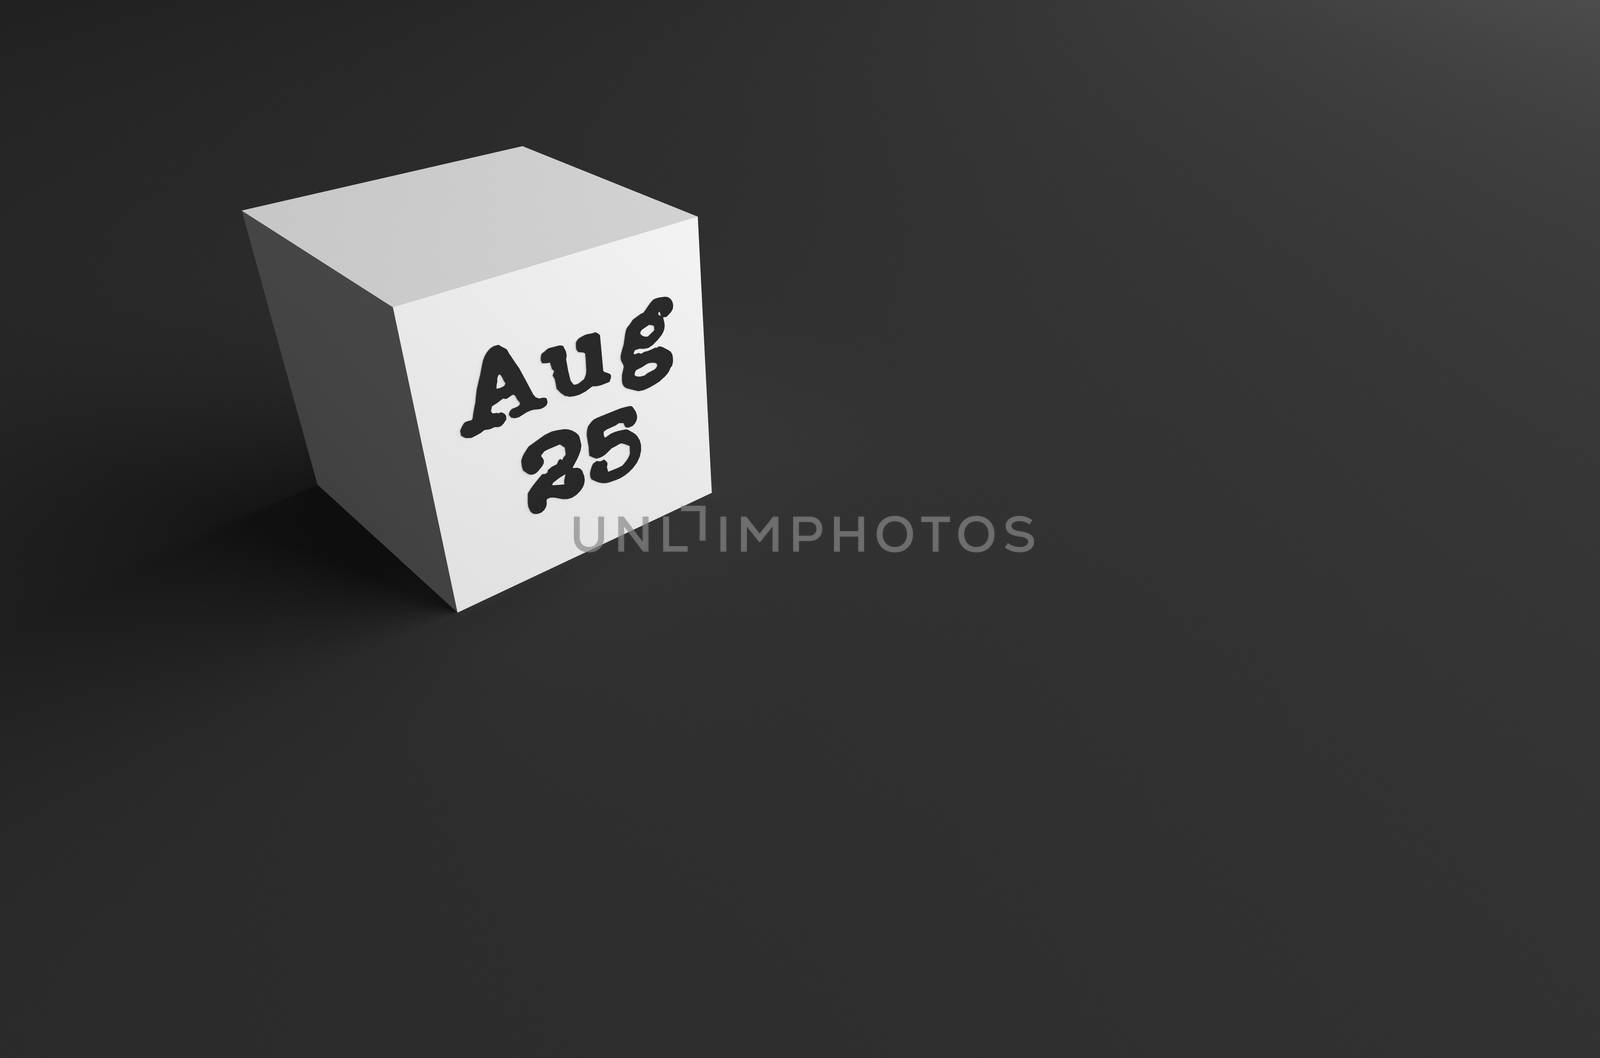 3D RENDERING OF Aug 25 by PrettyTG